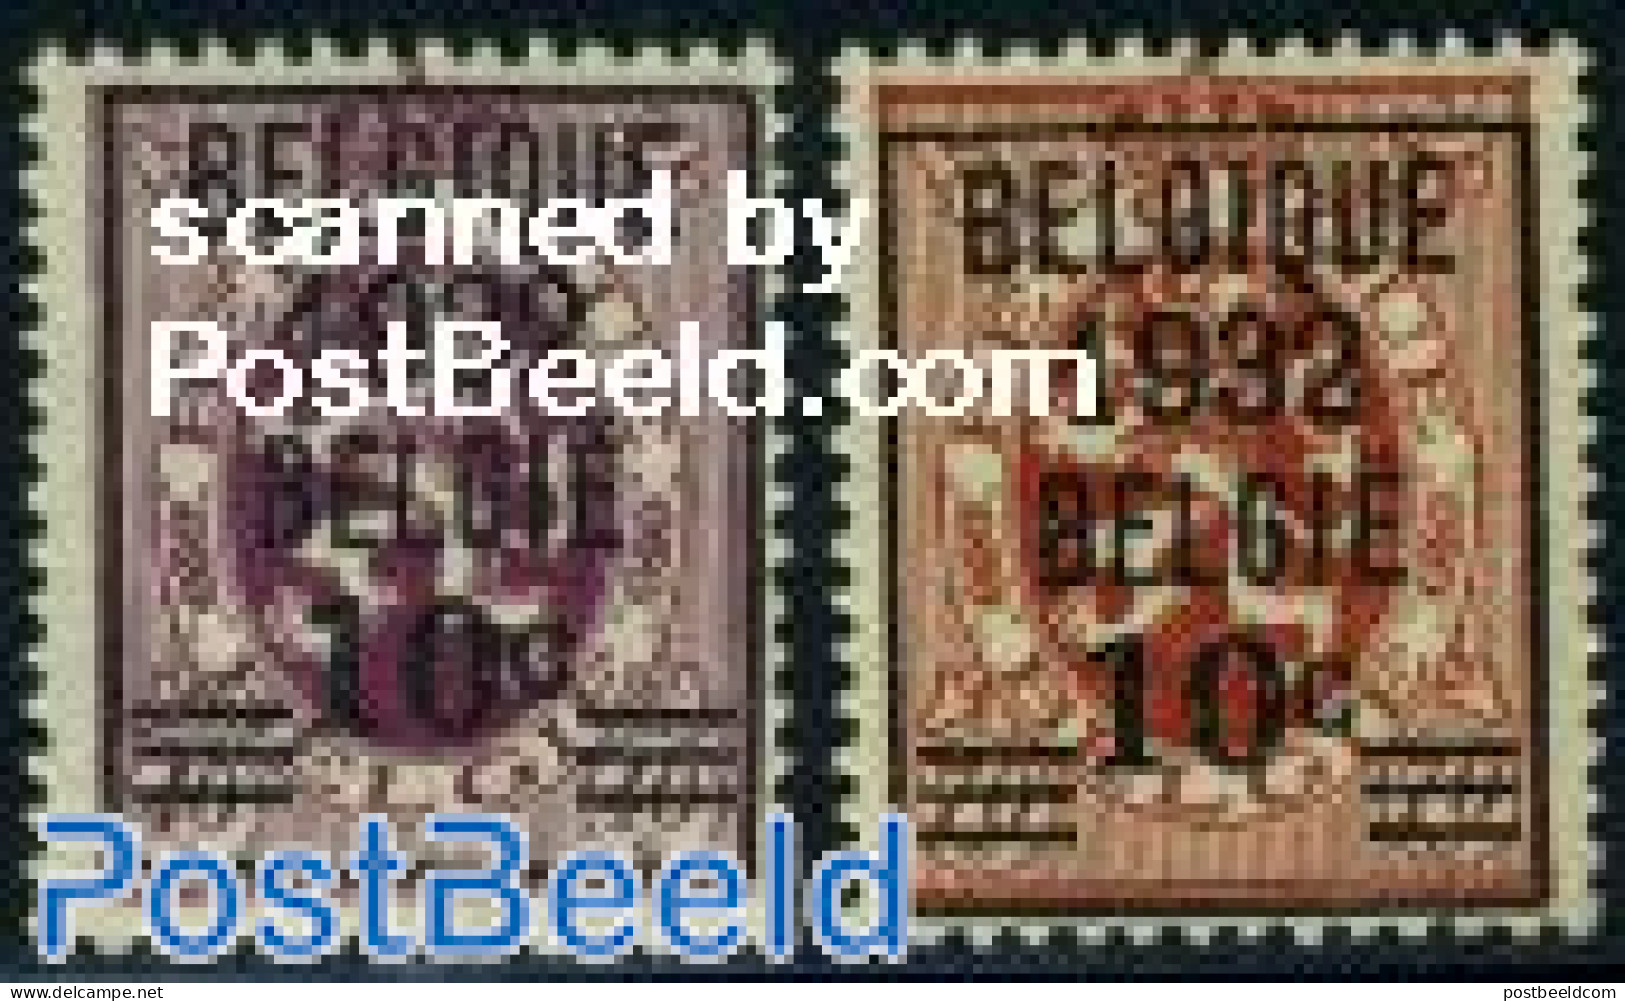 Belgium 1932 Overprints 2v, Mint NH - Unused Stamps